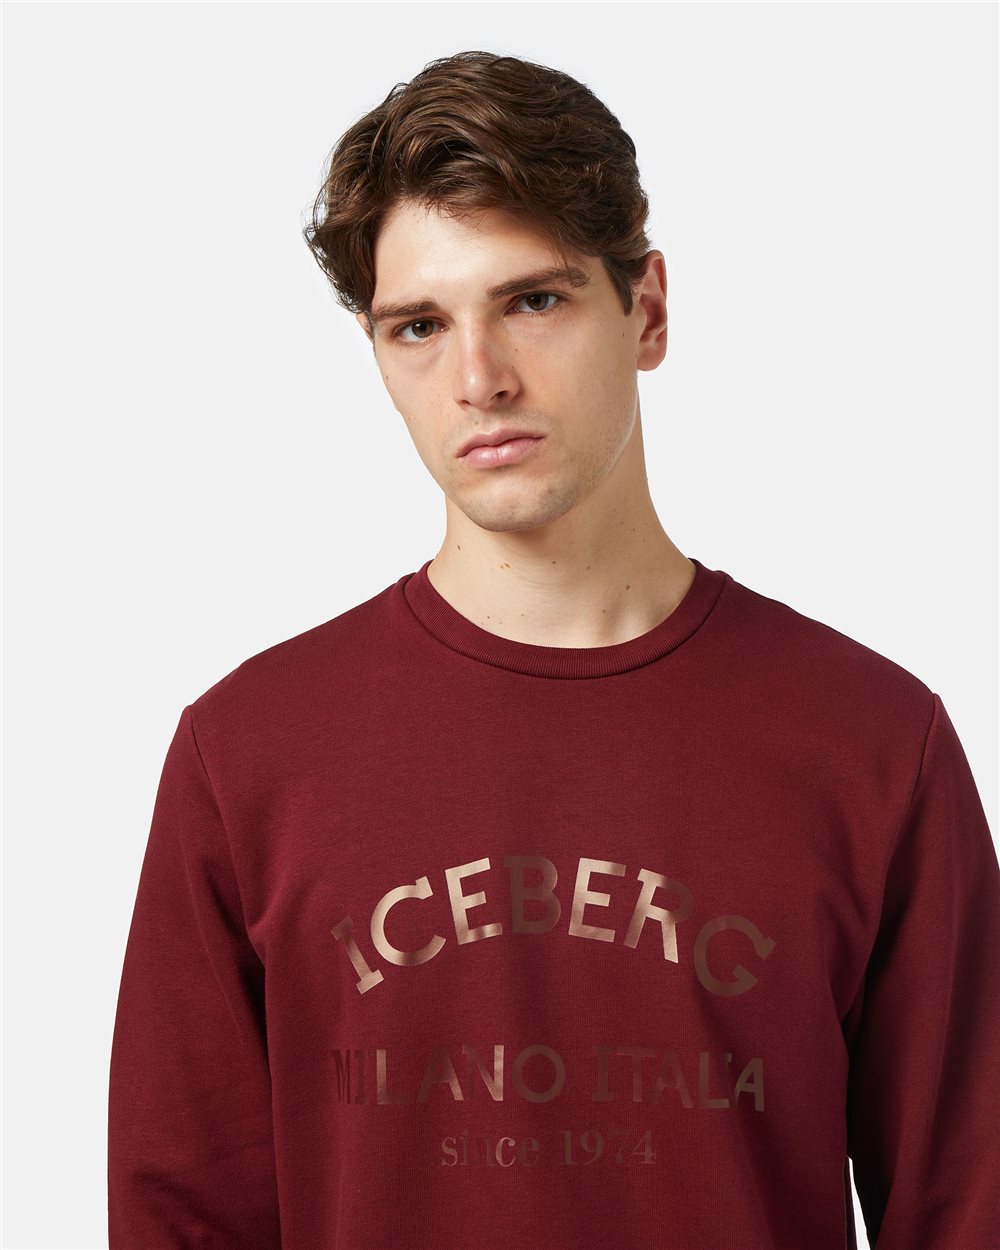 Sweatshirt with institutional logo - Iceberg - Official Website